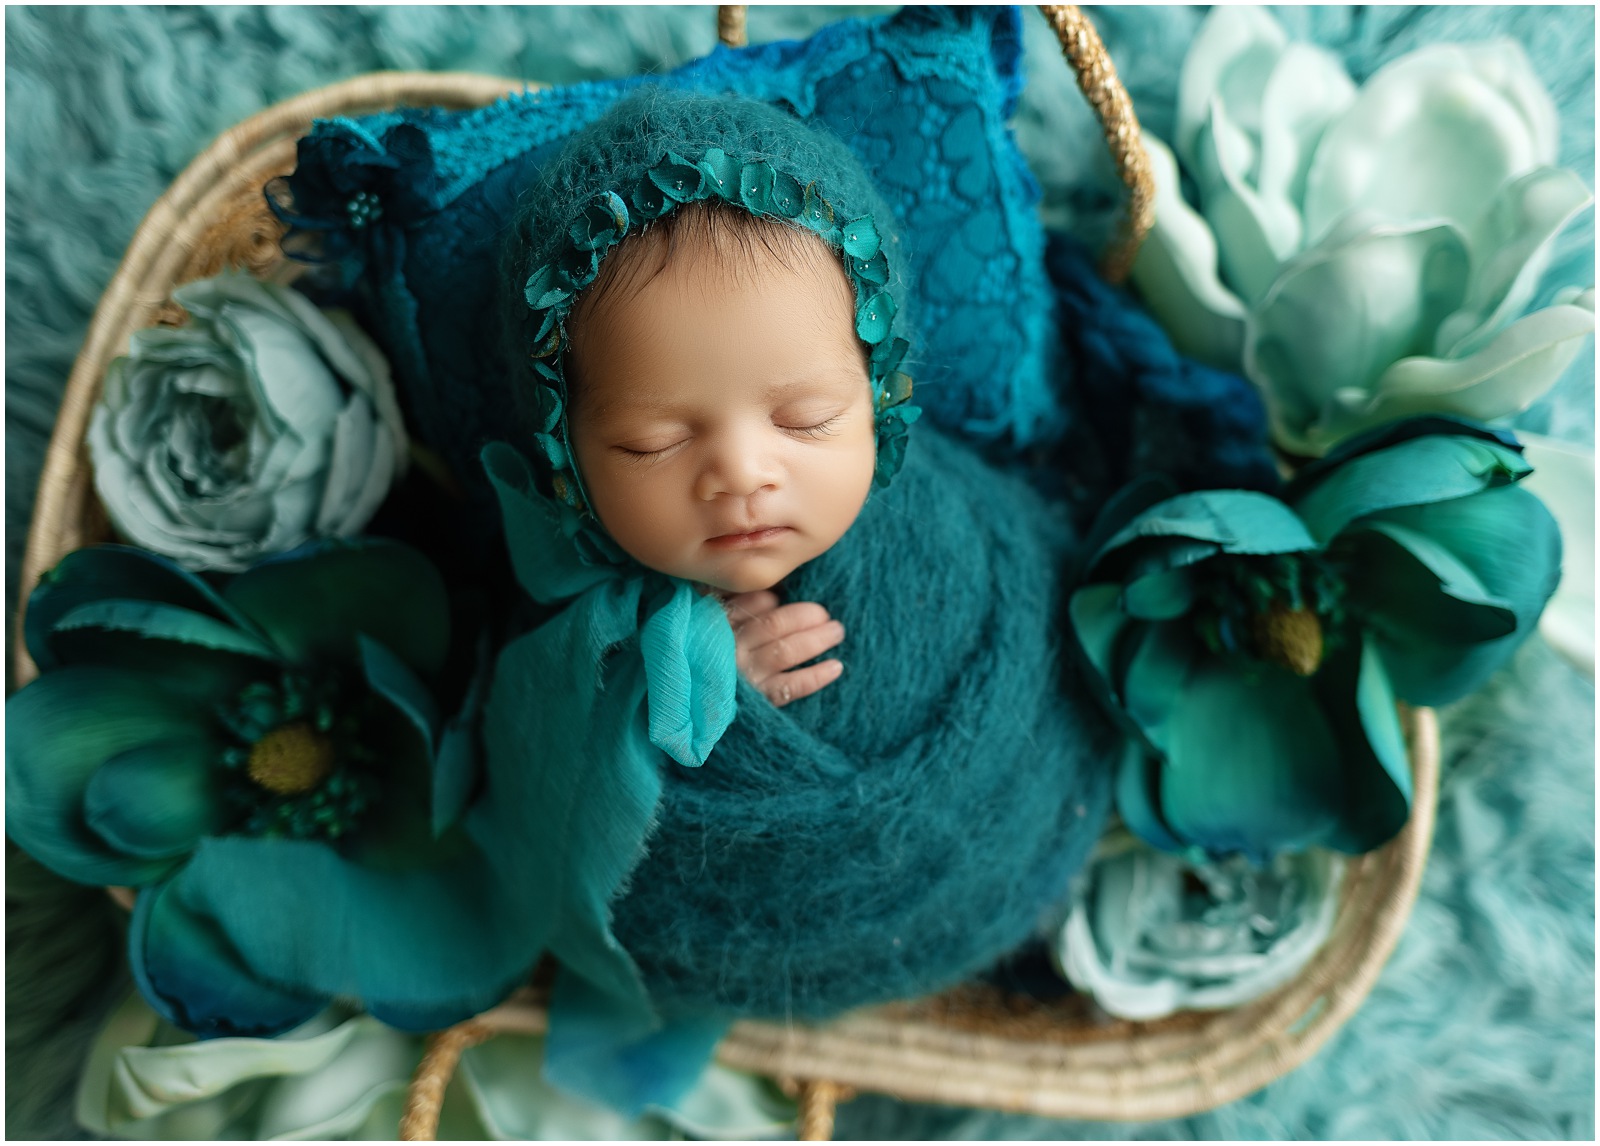 Category: Newborn  Newborn pictures, Newborn, Newborn photos